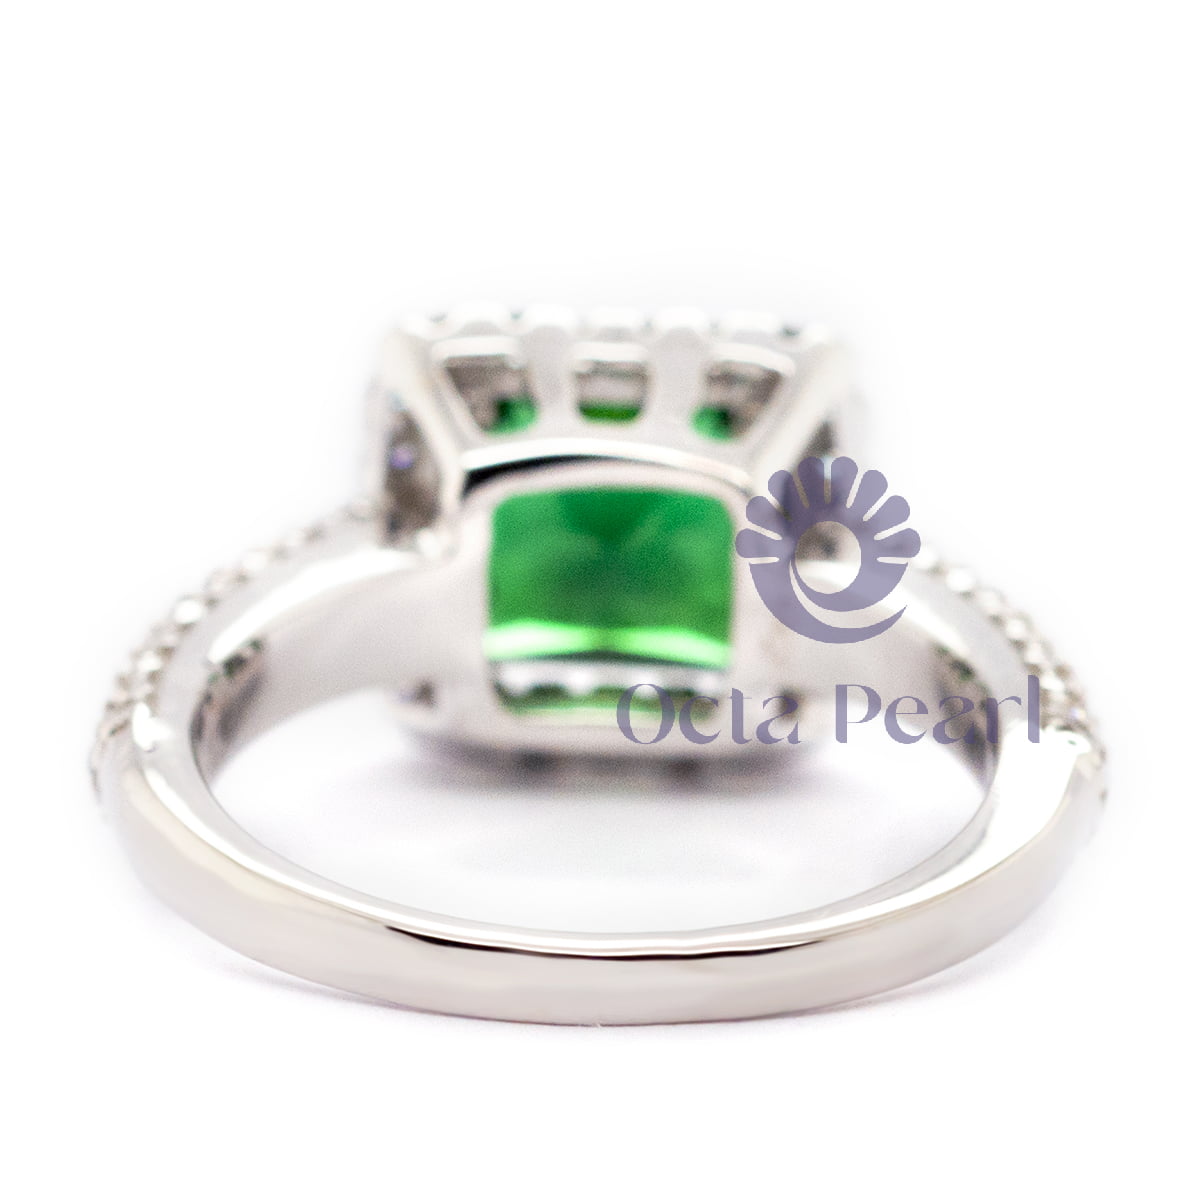 Green Princess Cubic Zirconia Stone Halo Engagement Wedding Ring ( 2 1/2 TCW )